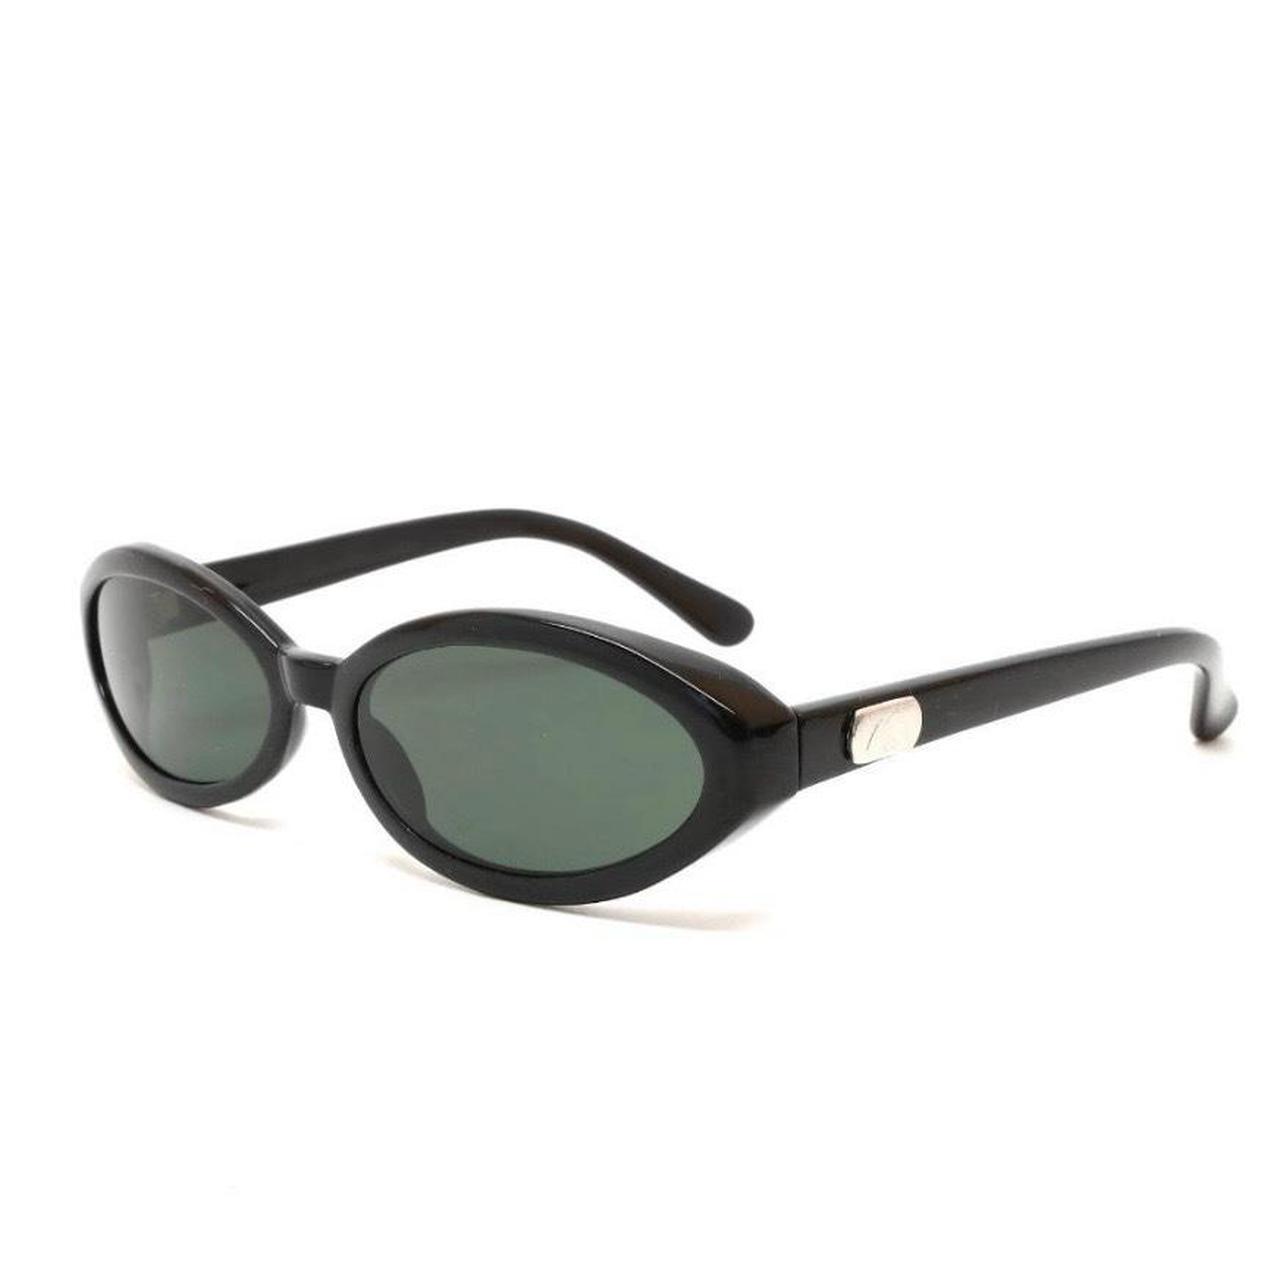 Authentic 90s Vintage Mod Black Oval Sunglasses • Depop 